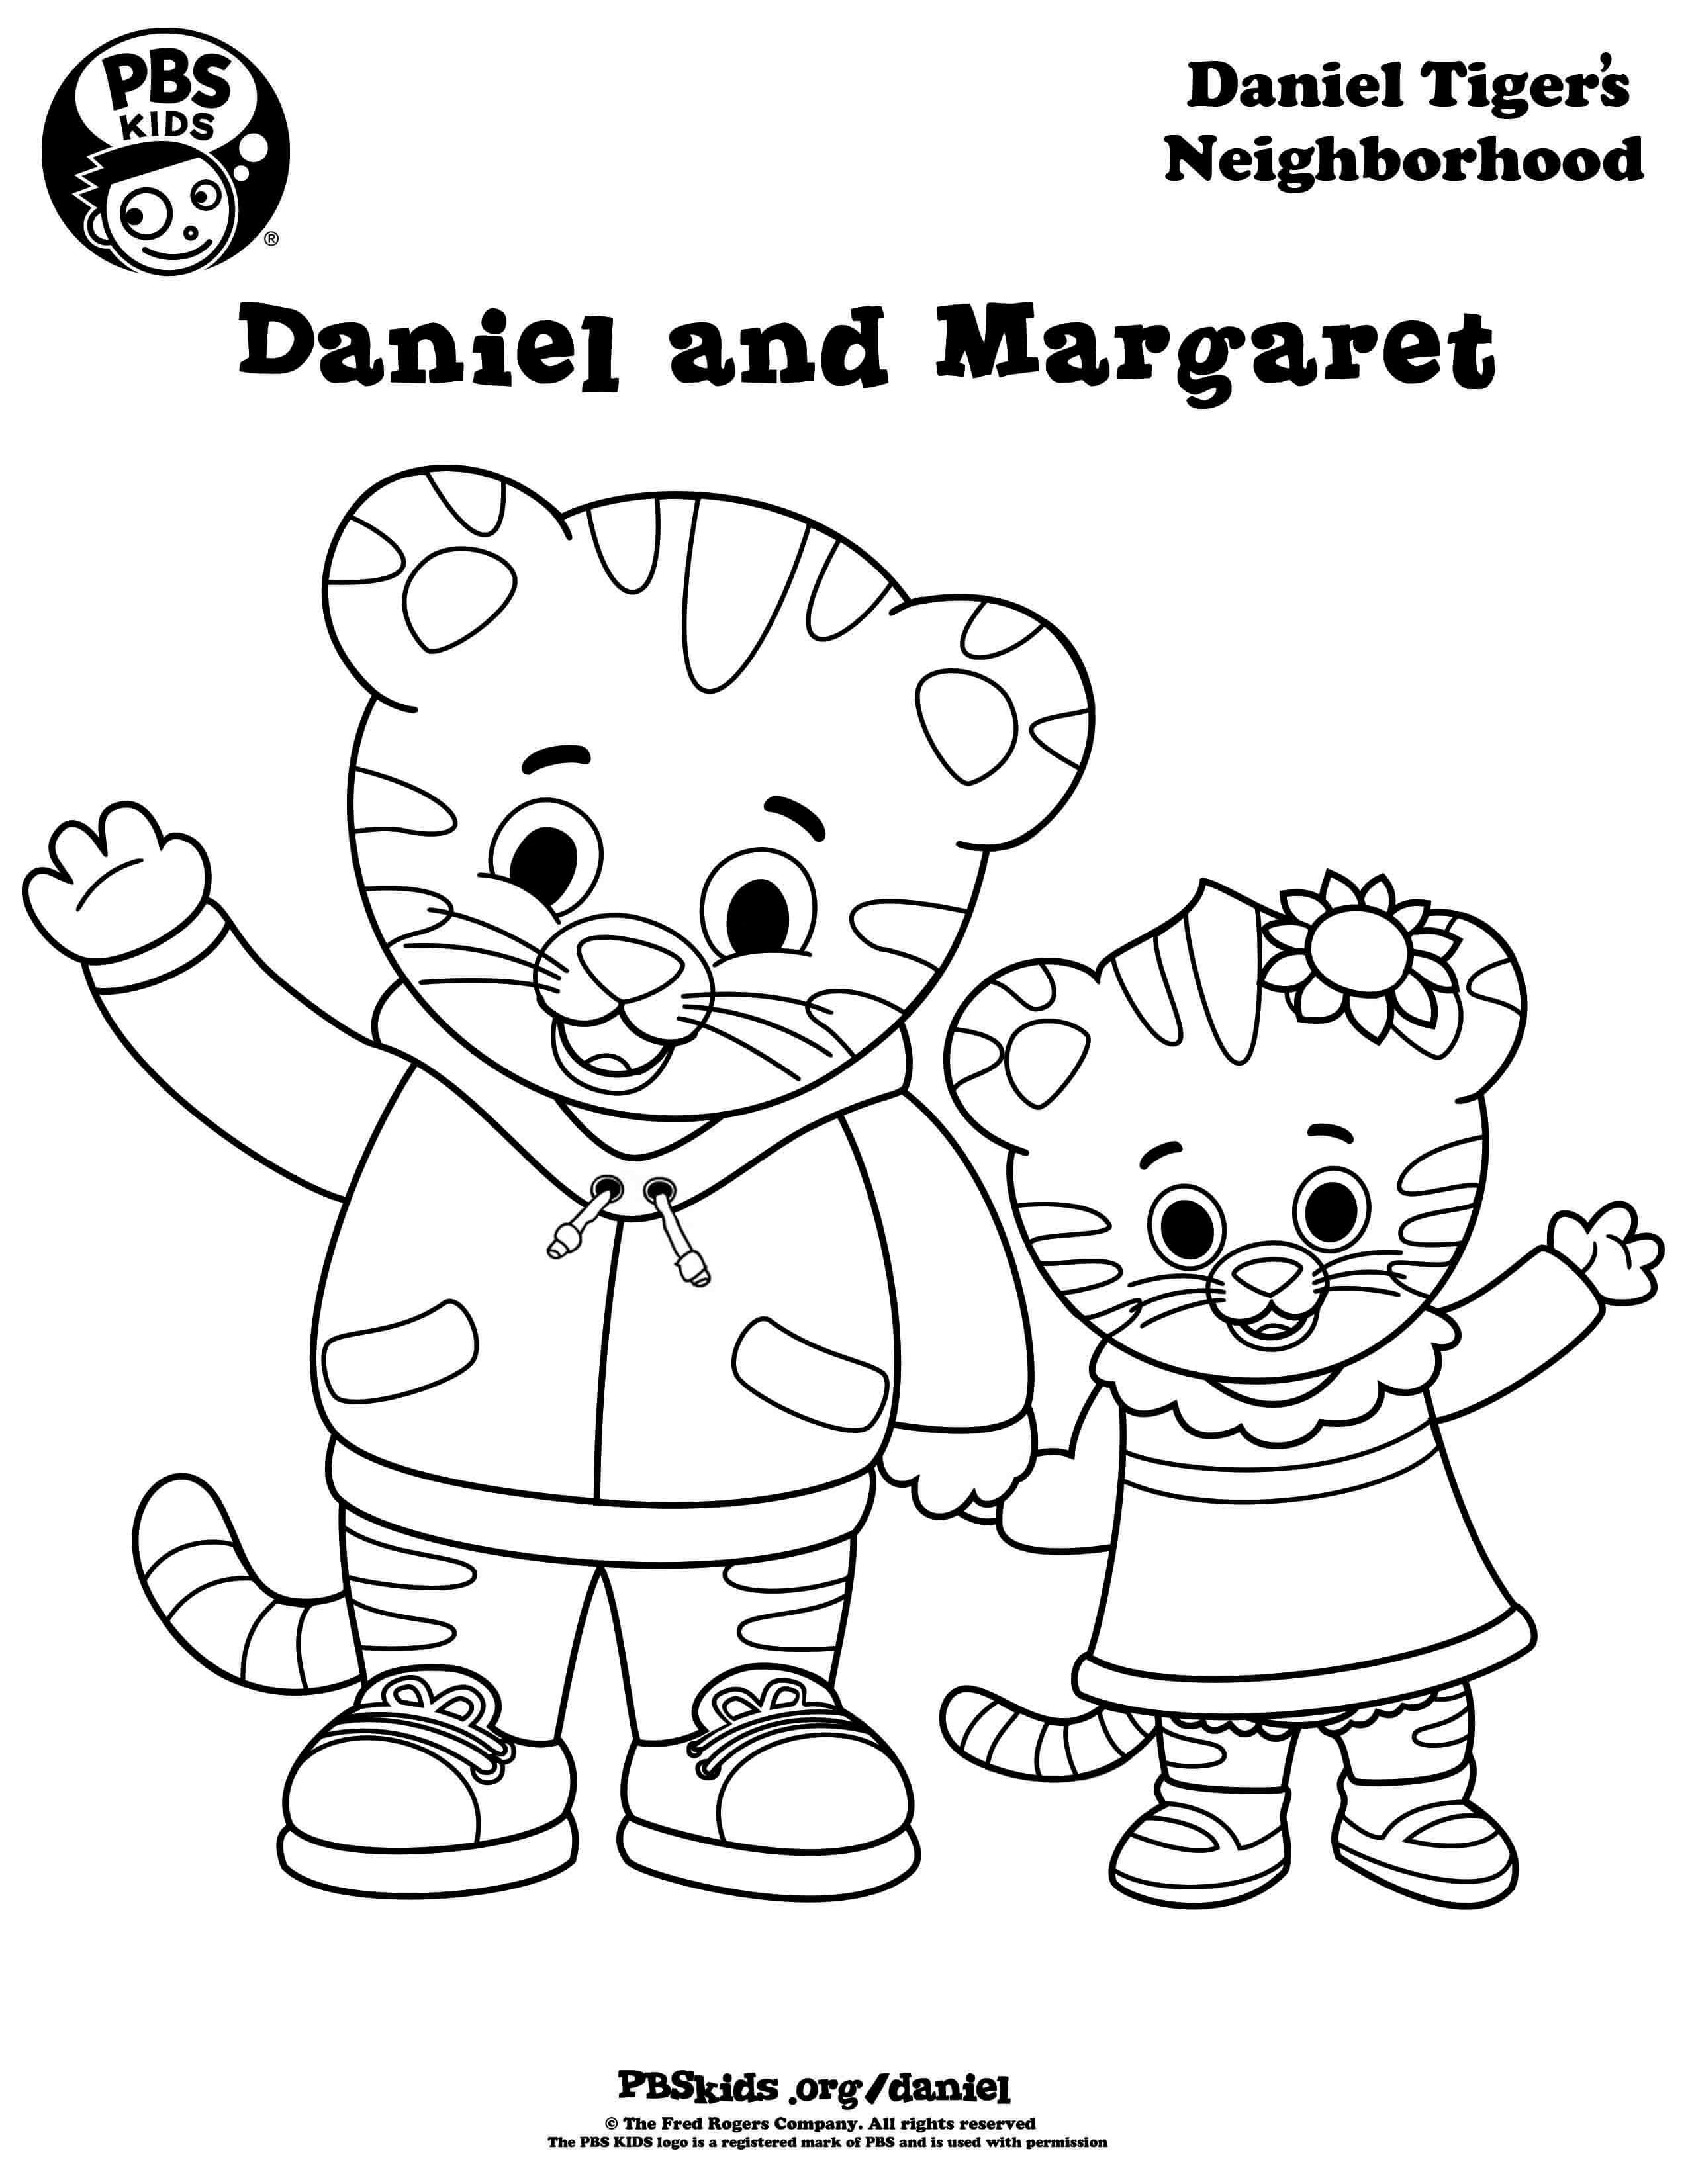 Daniel Tiger And Maragaret Coloring Page